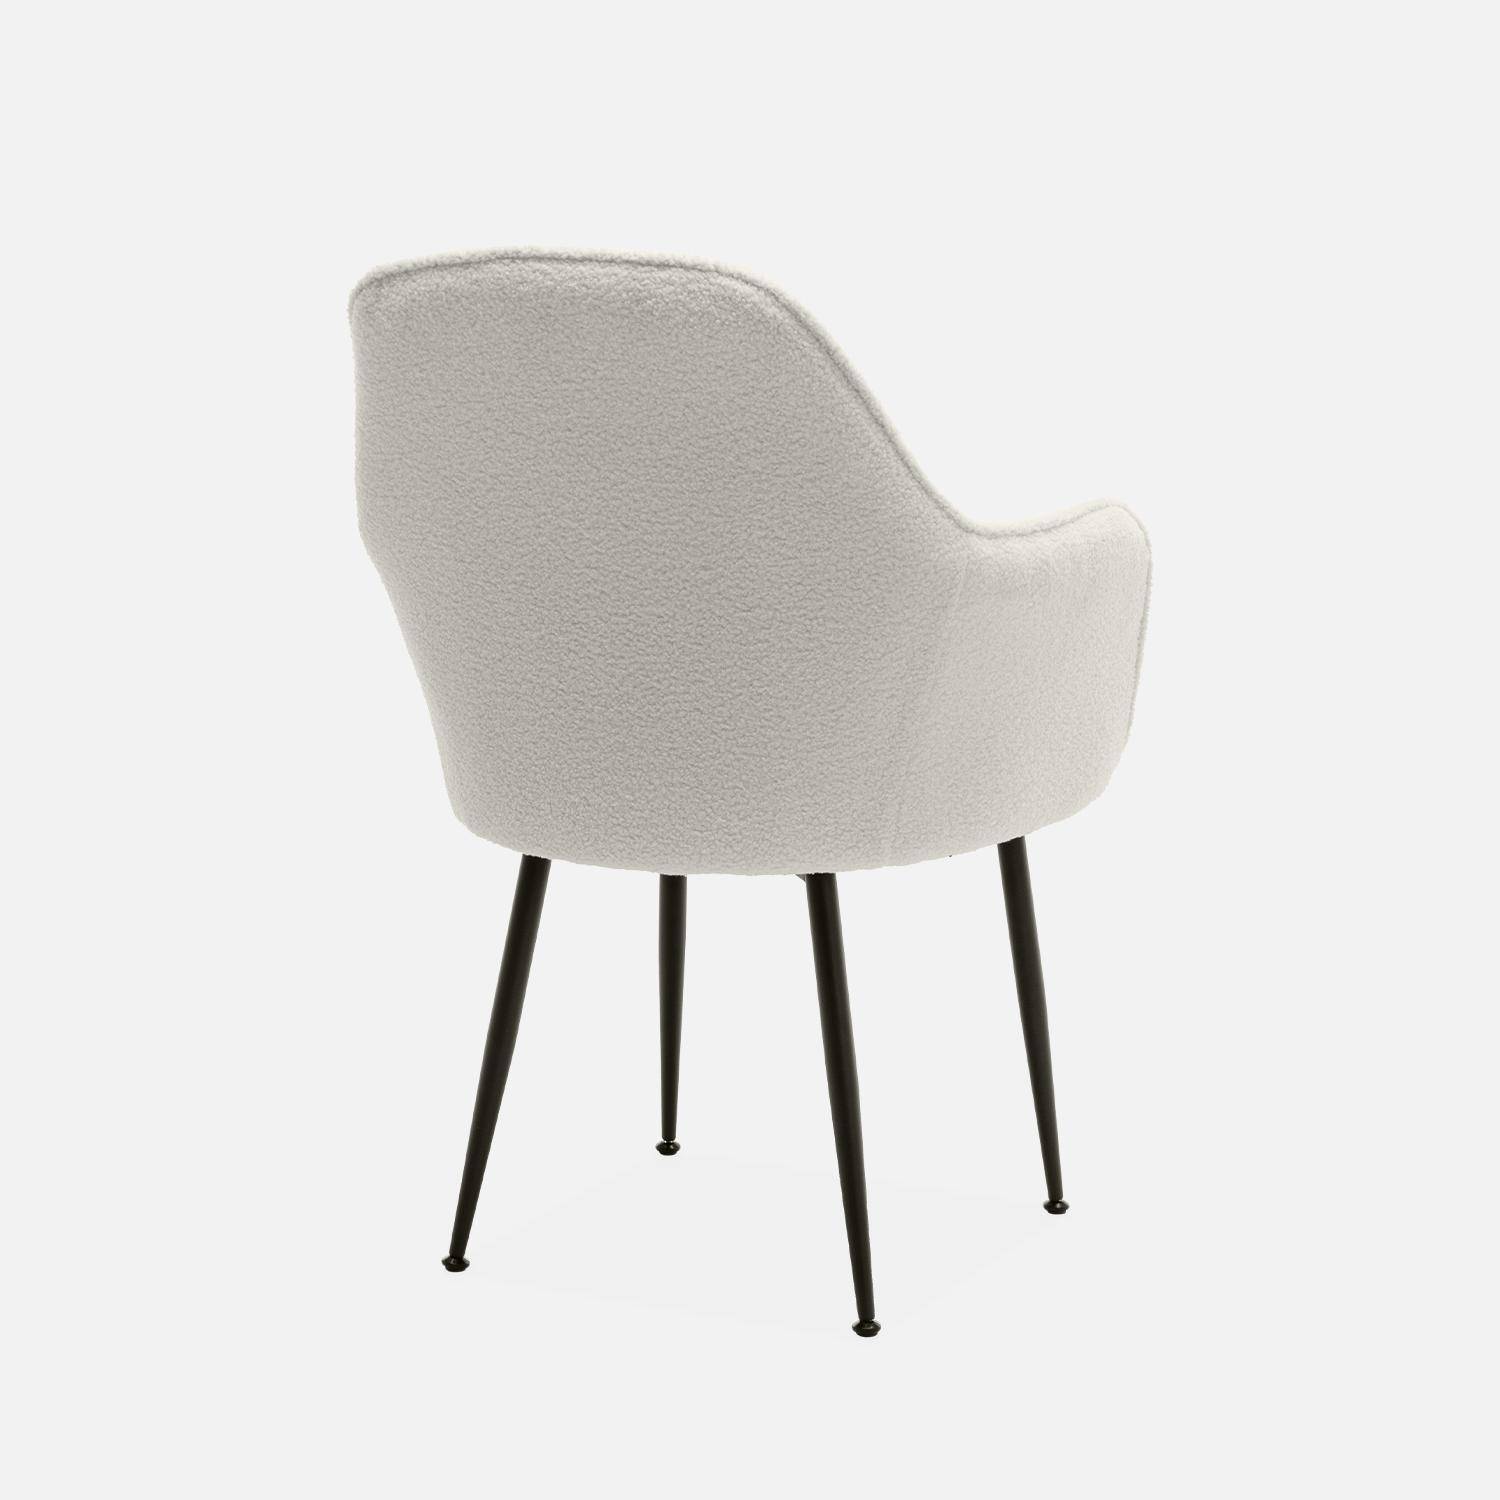 Set of 2 Boucle armchair with metal legs, 58x58x85cm - Shella Boucle - White,sweeek,Photo4